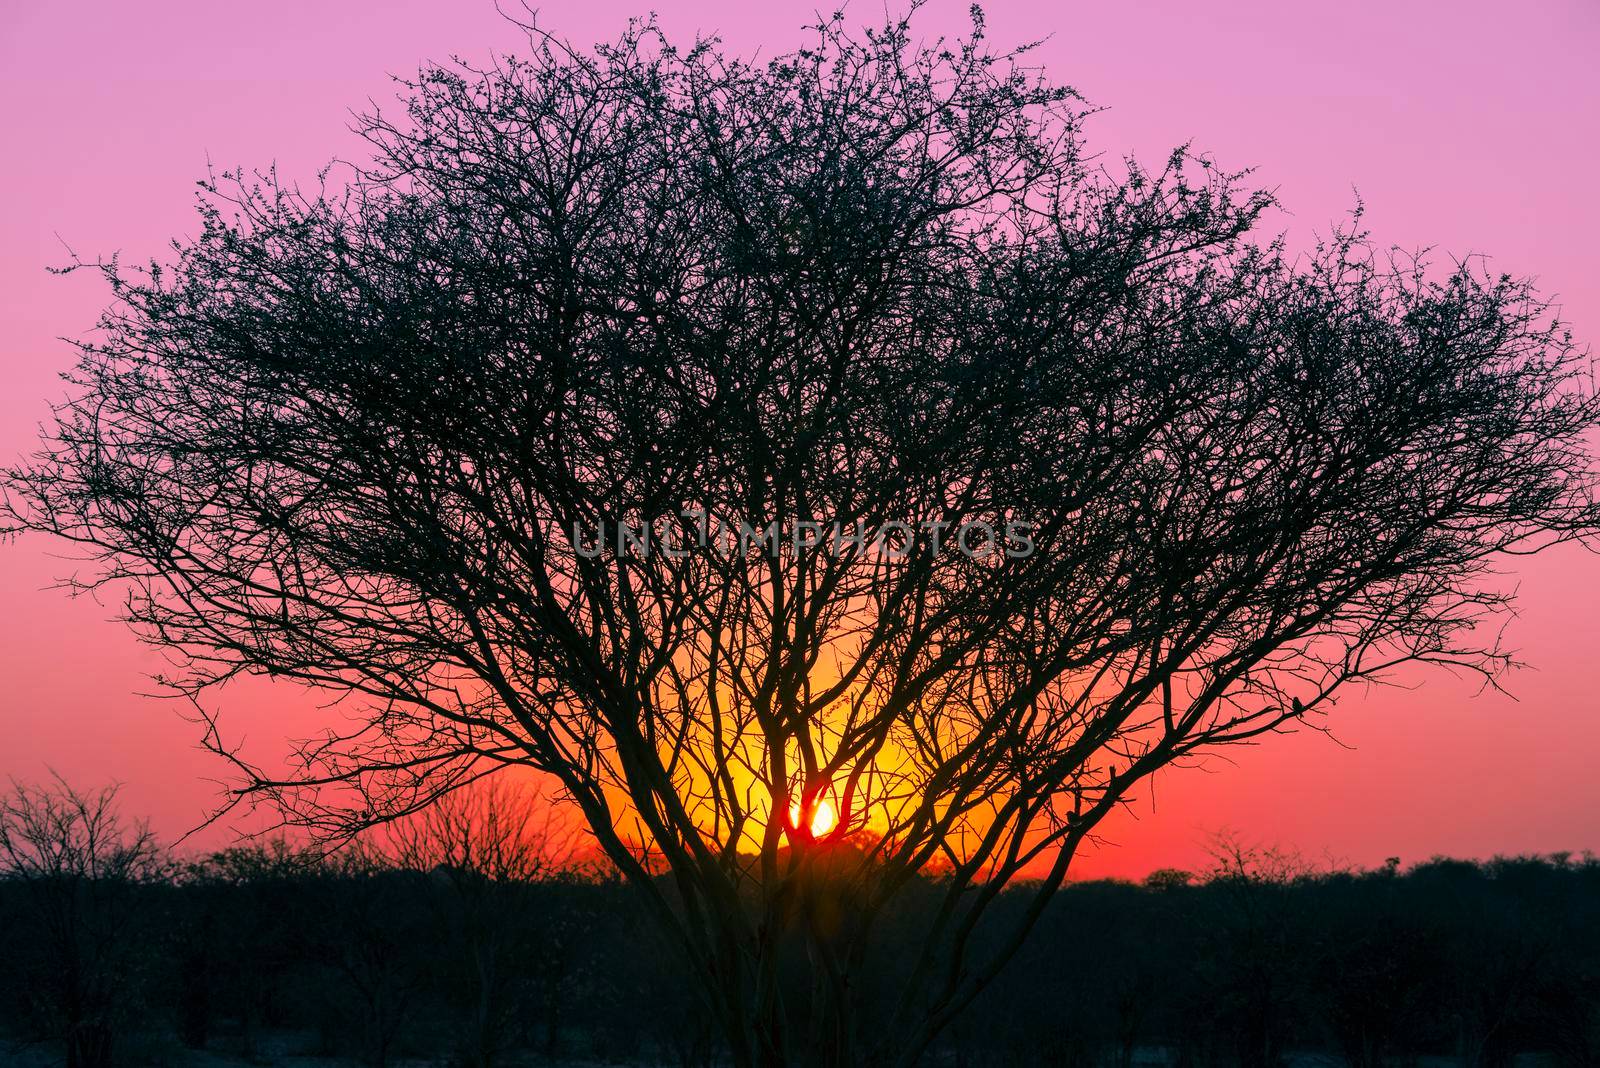 desert dusk landscape with sun disk shining through tree branches